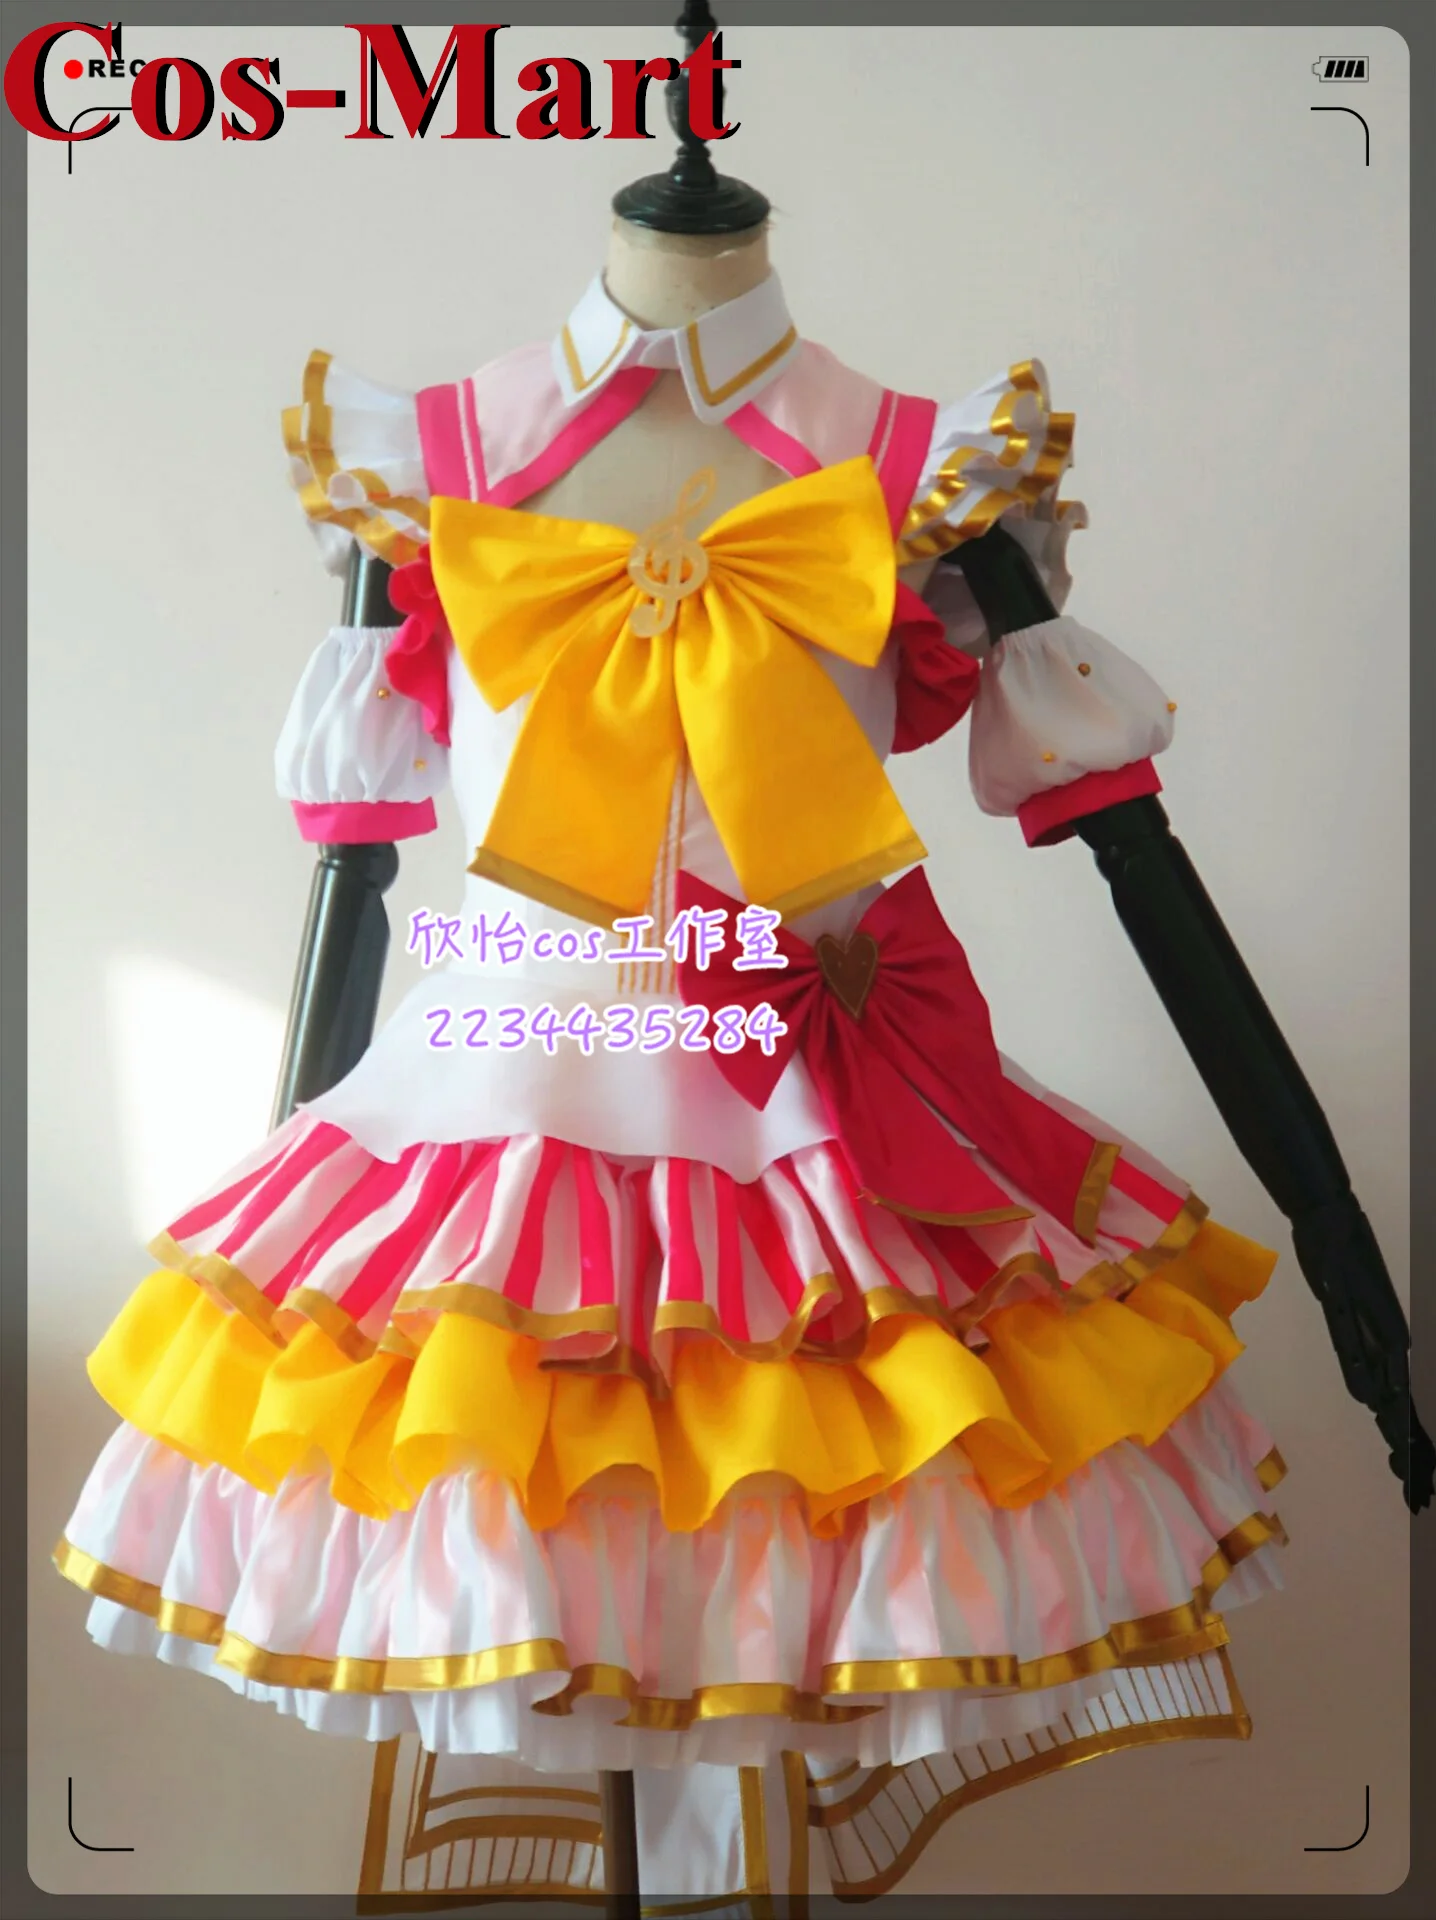 

Cos-Mart Puripara Manaka Laala Cosplay Costume Gorgeous Elegant Battle Uniform Activity Party Role Play Clothing Dress